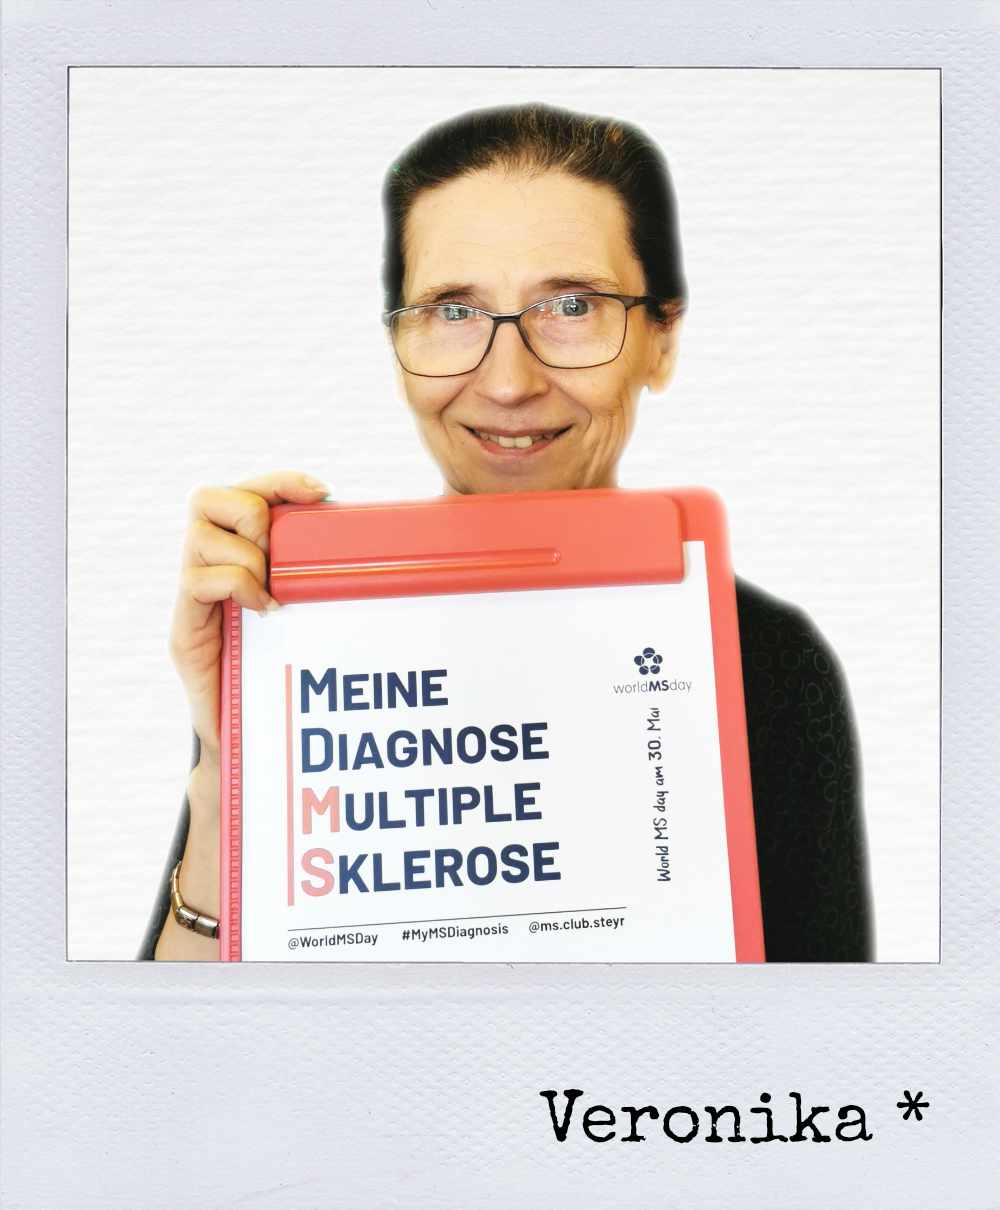 Veronika Meine MS Diagnose